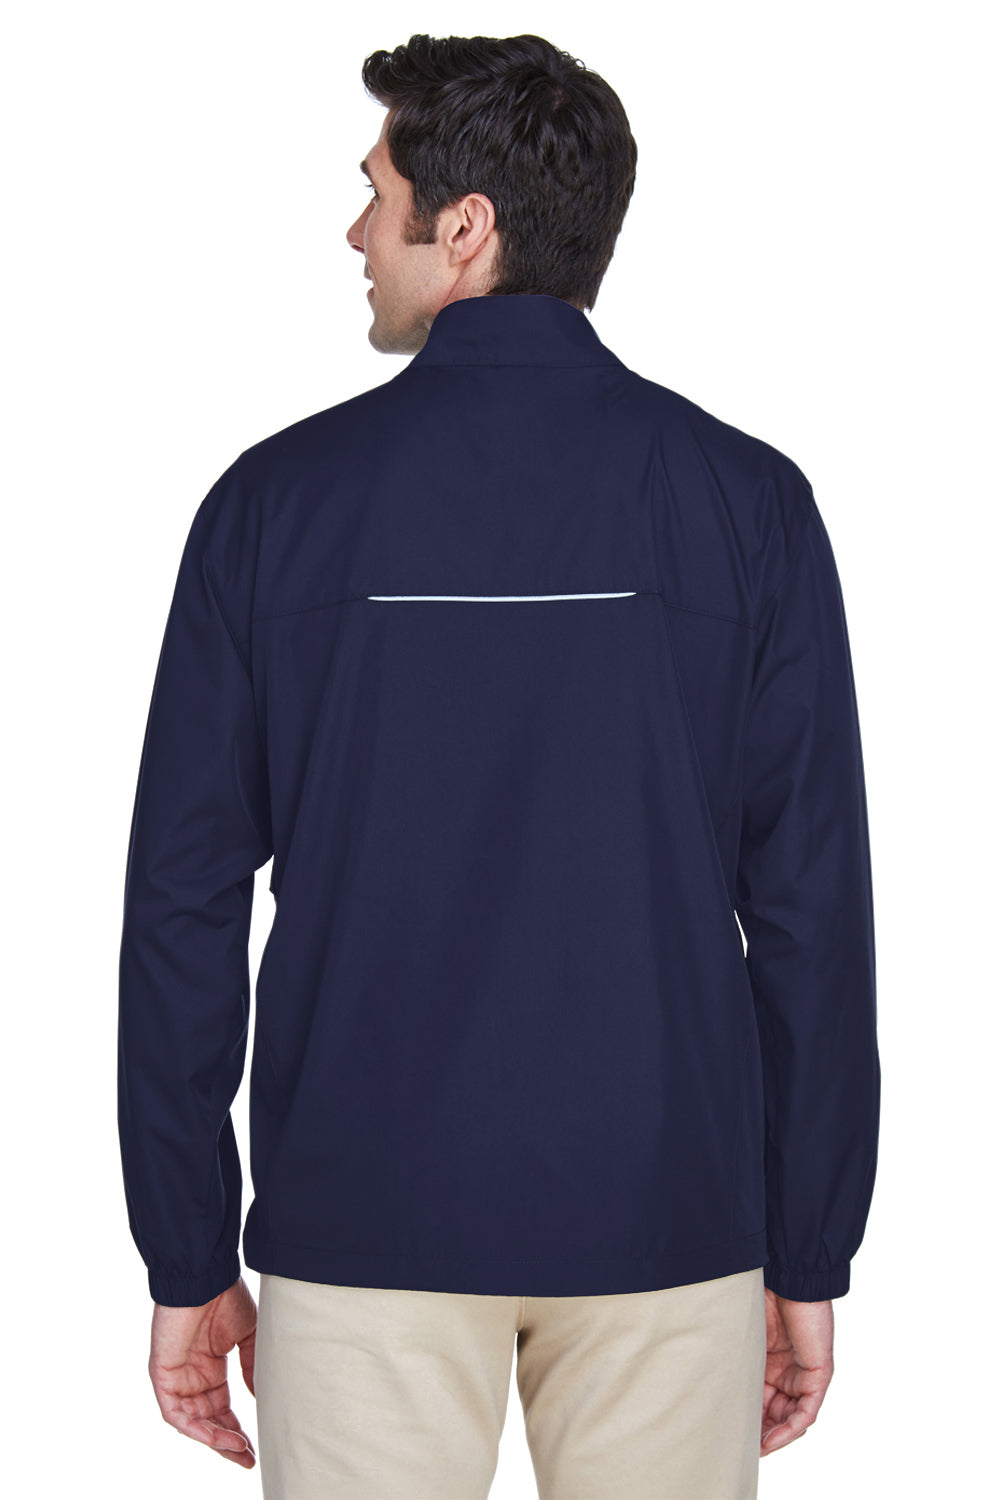 Core 365 88183 Mens Motivate Water Resistant Full Zip Jacket Navy Blue Back